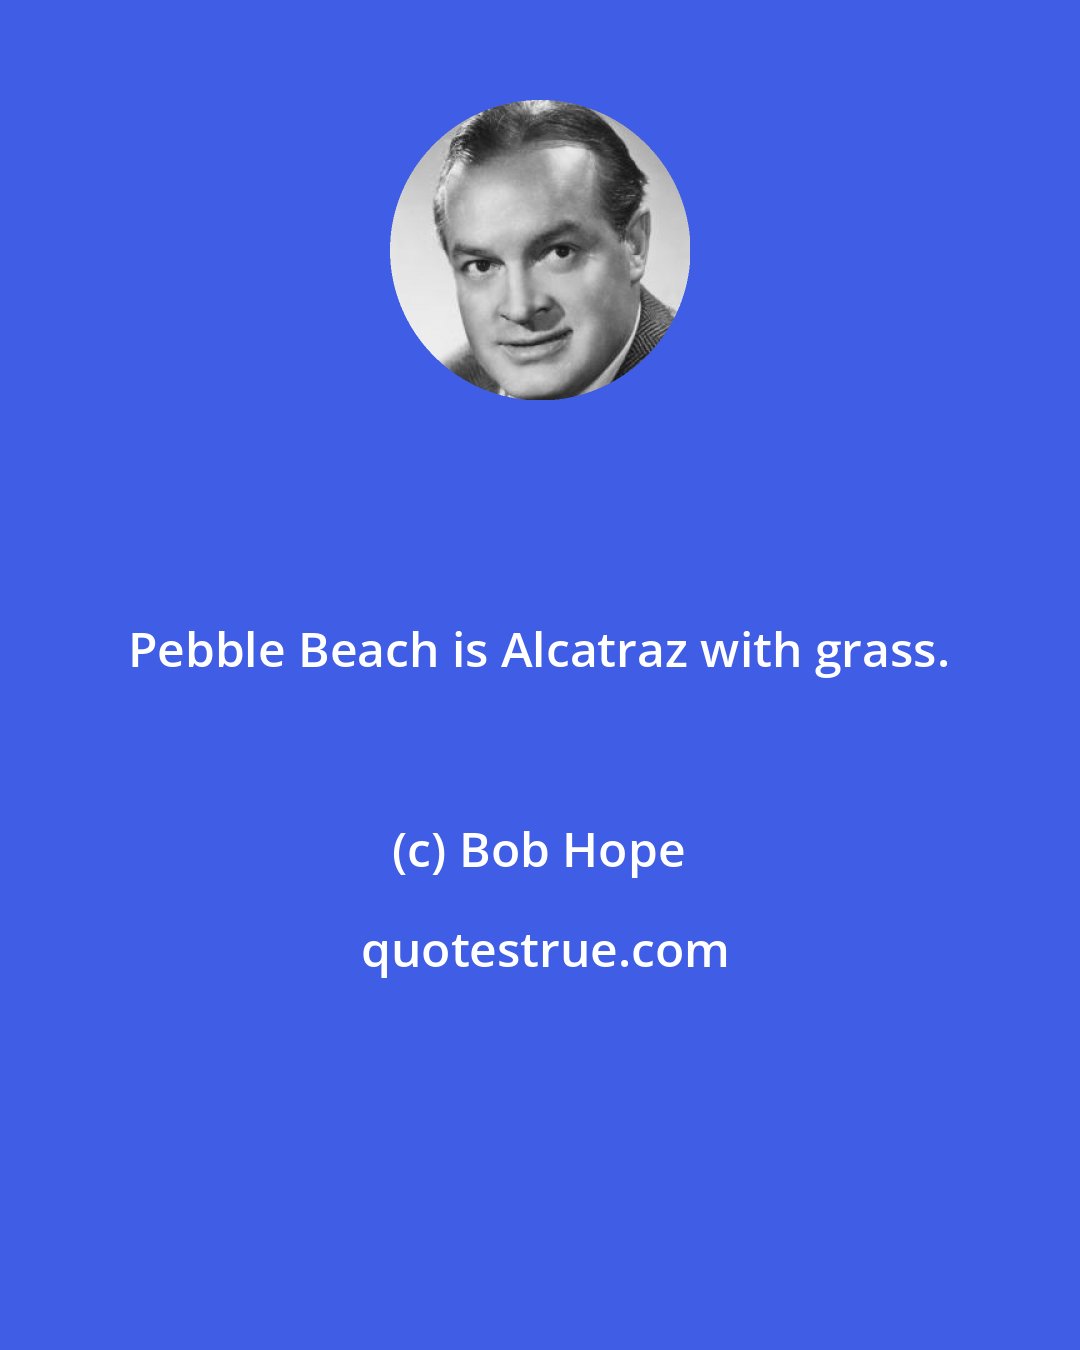 Bob Hope: Pebble Beach is Alcatraz with grass.